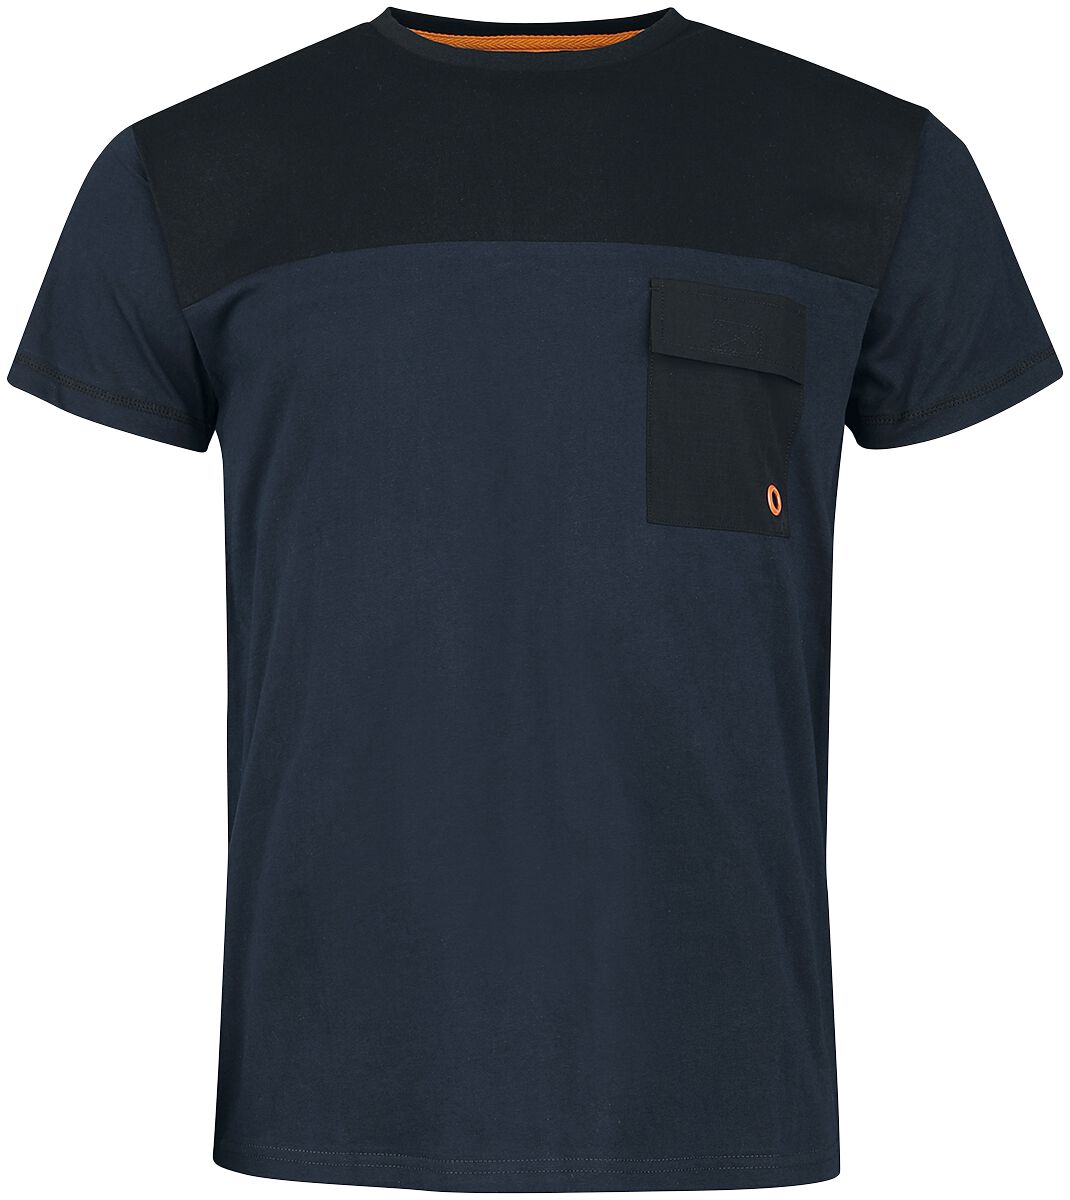 Counter-Strike Global Offensive - CS:GO T-Shirt blau in L